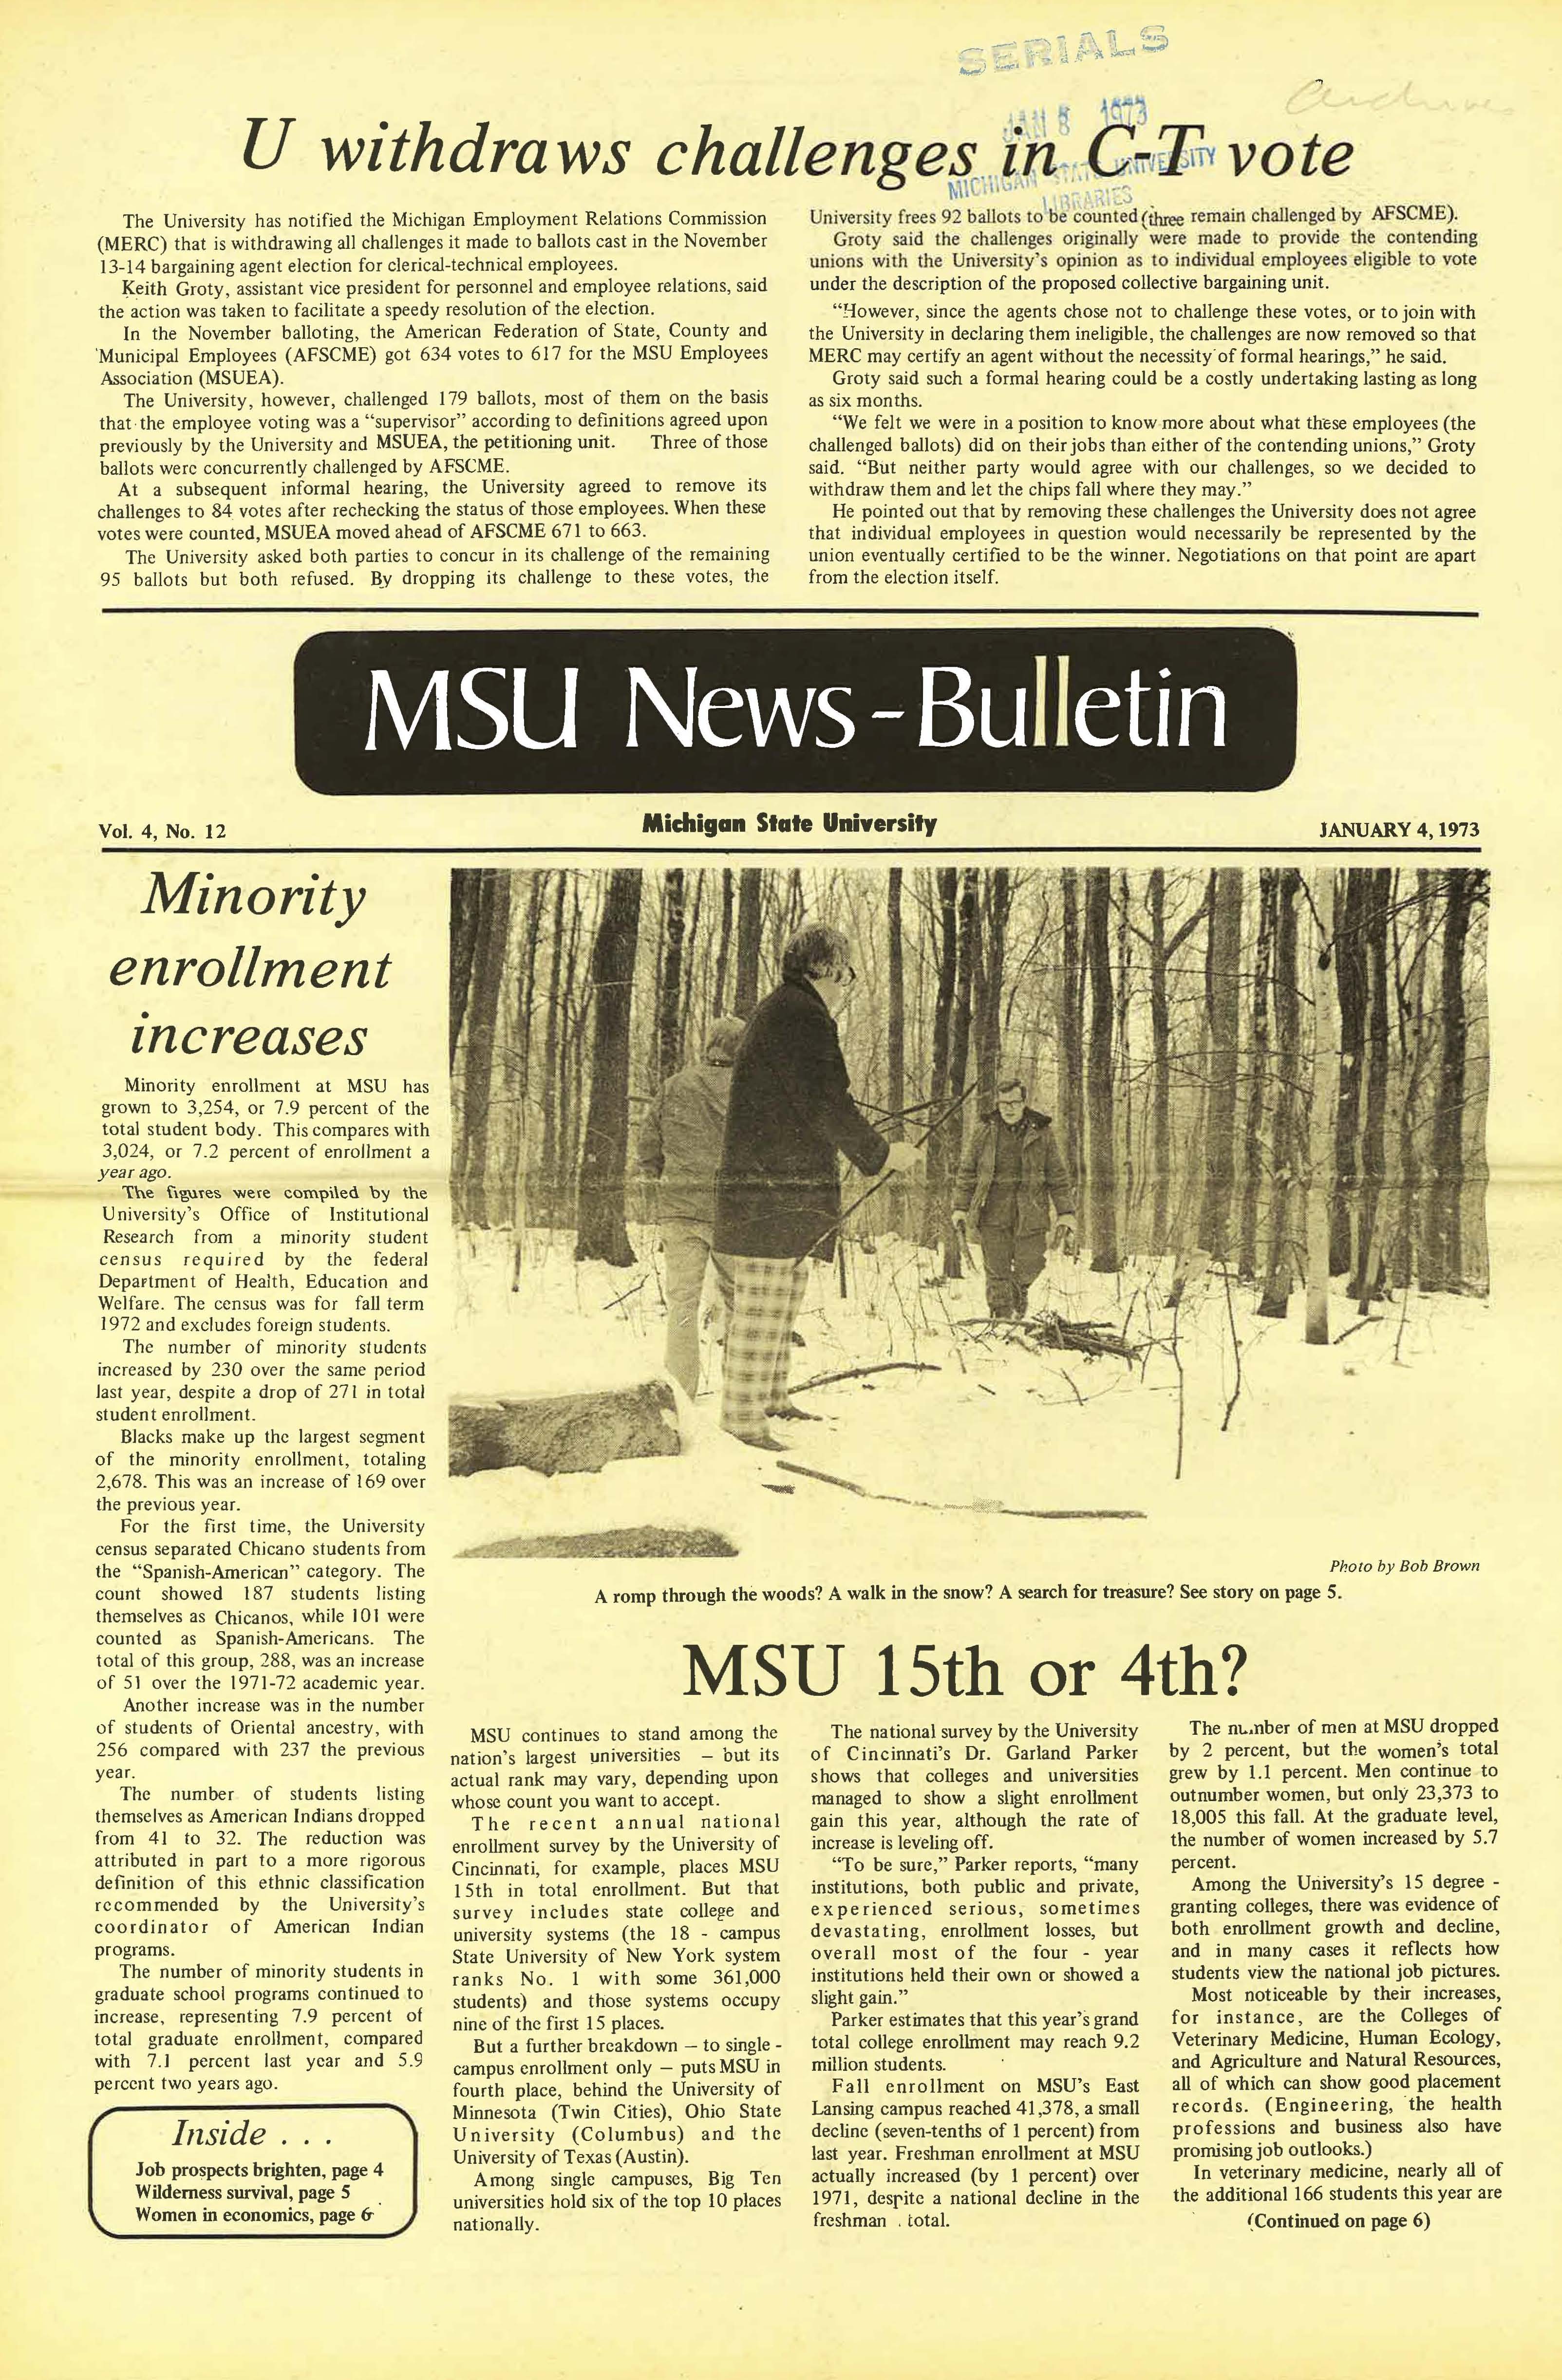 MSU News Bulletin, vol. 4, No. 20, March 1, 1973